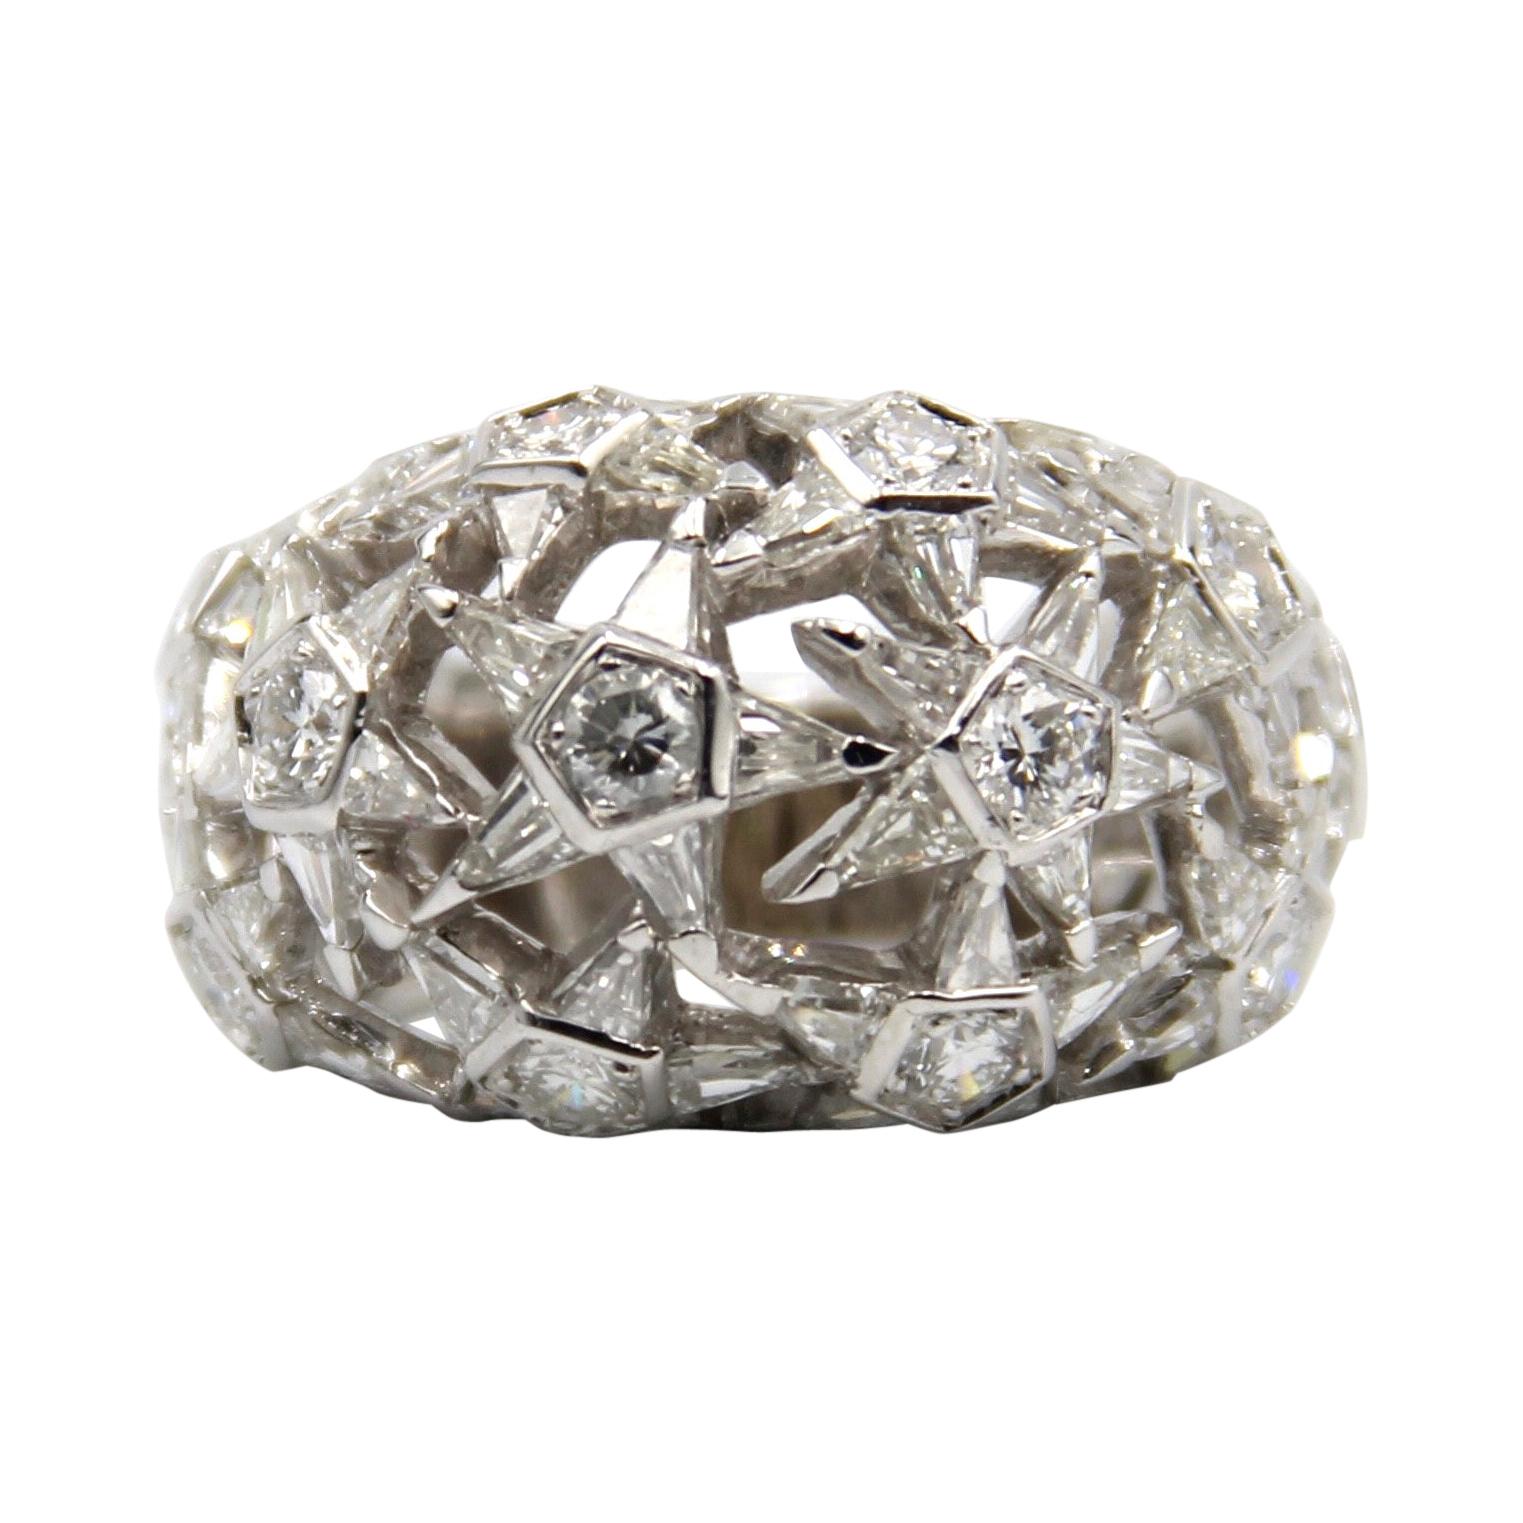 18k White Gold Diamond Ring Designed with Stars